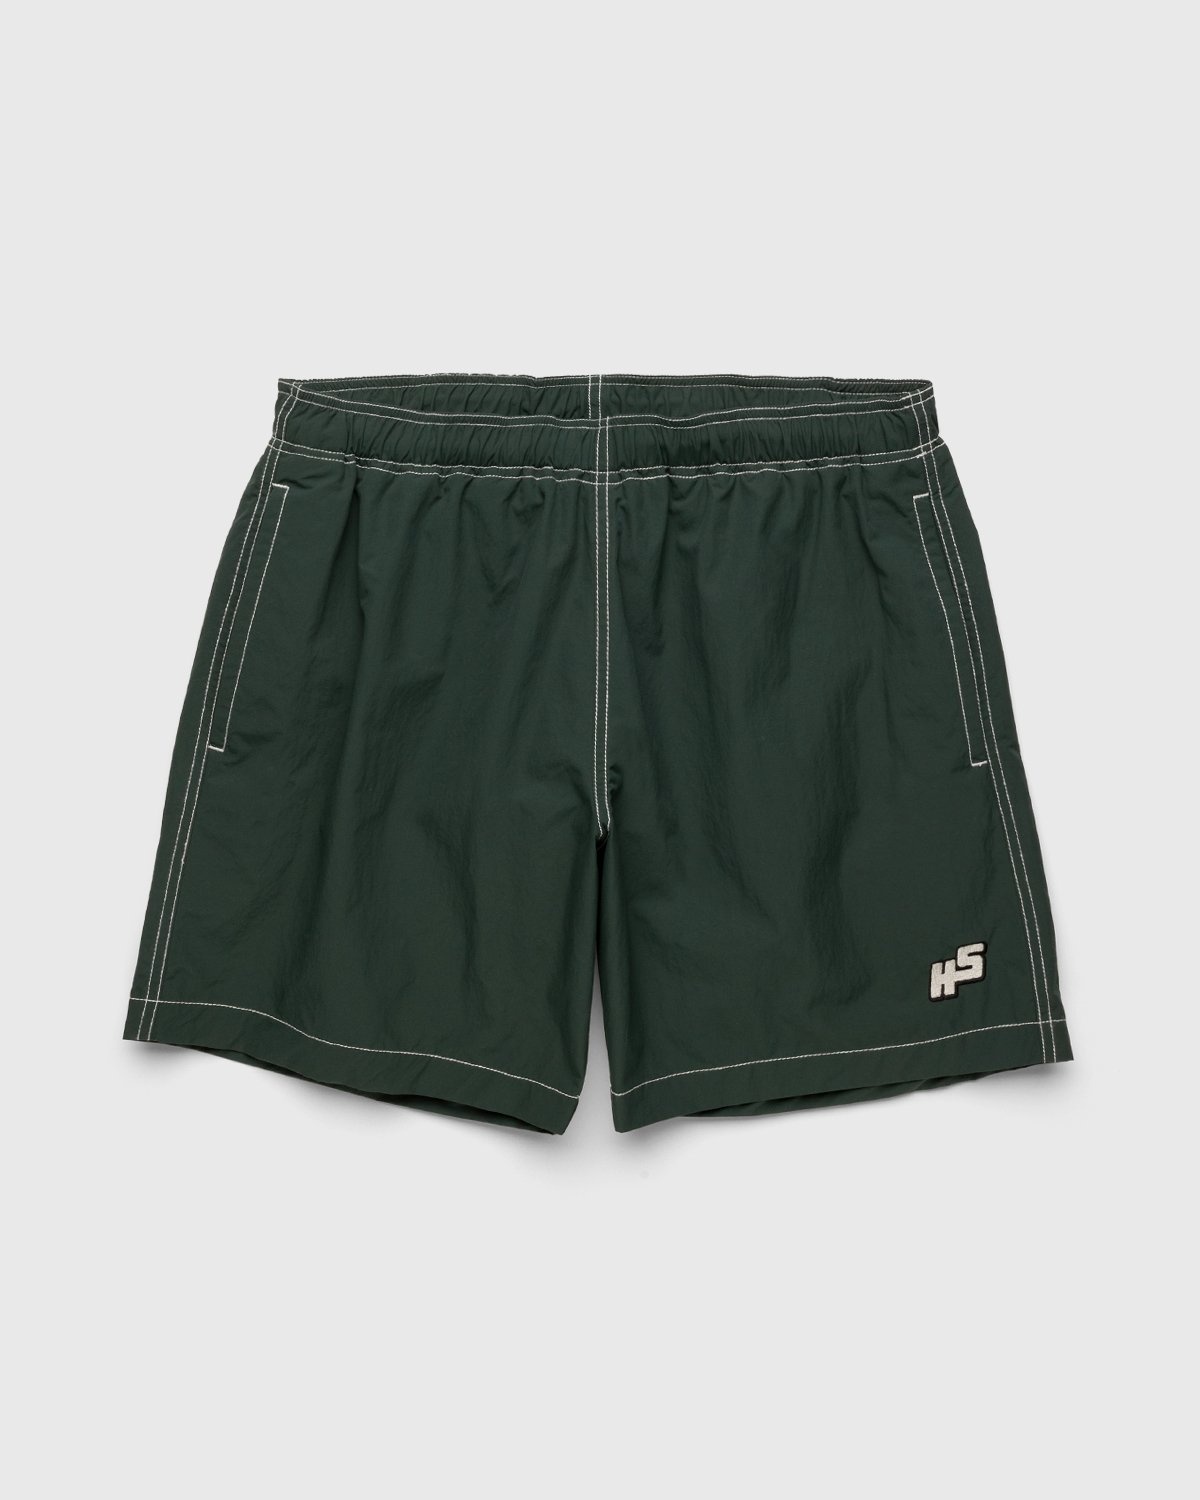 Highsnobiety – Contrast Brushed Nylon Water Shorts Green - Shorts - Green - Image 1